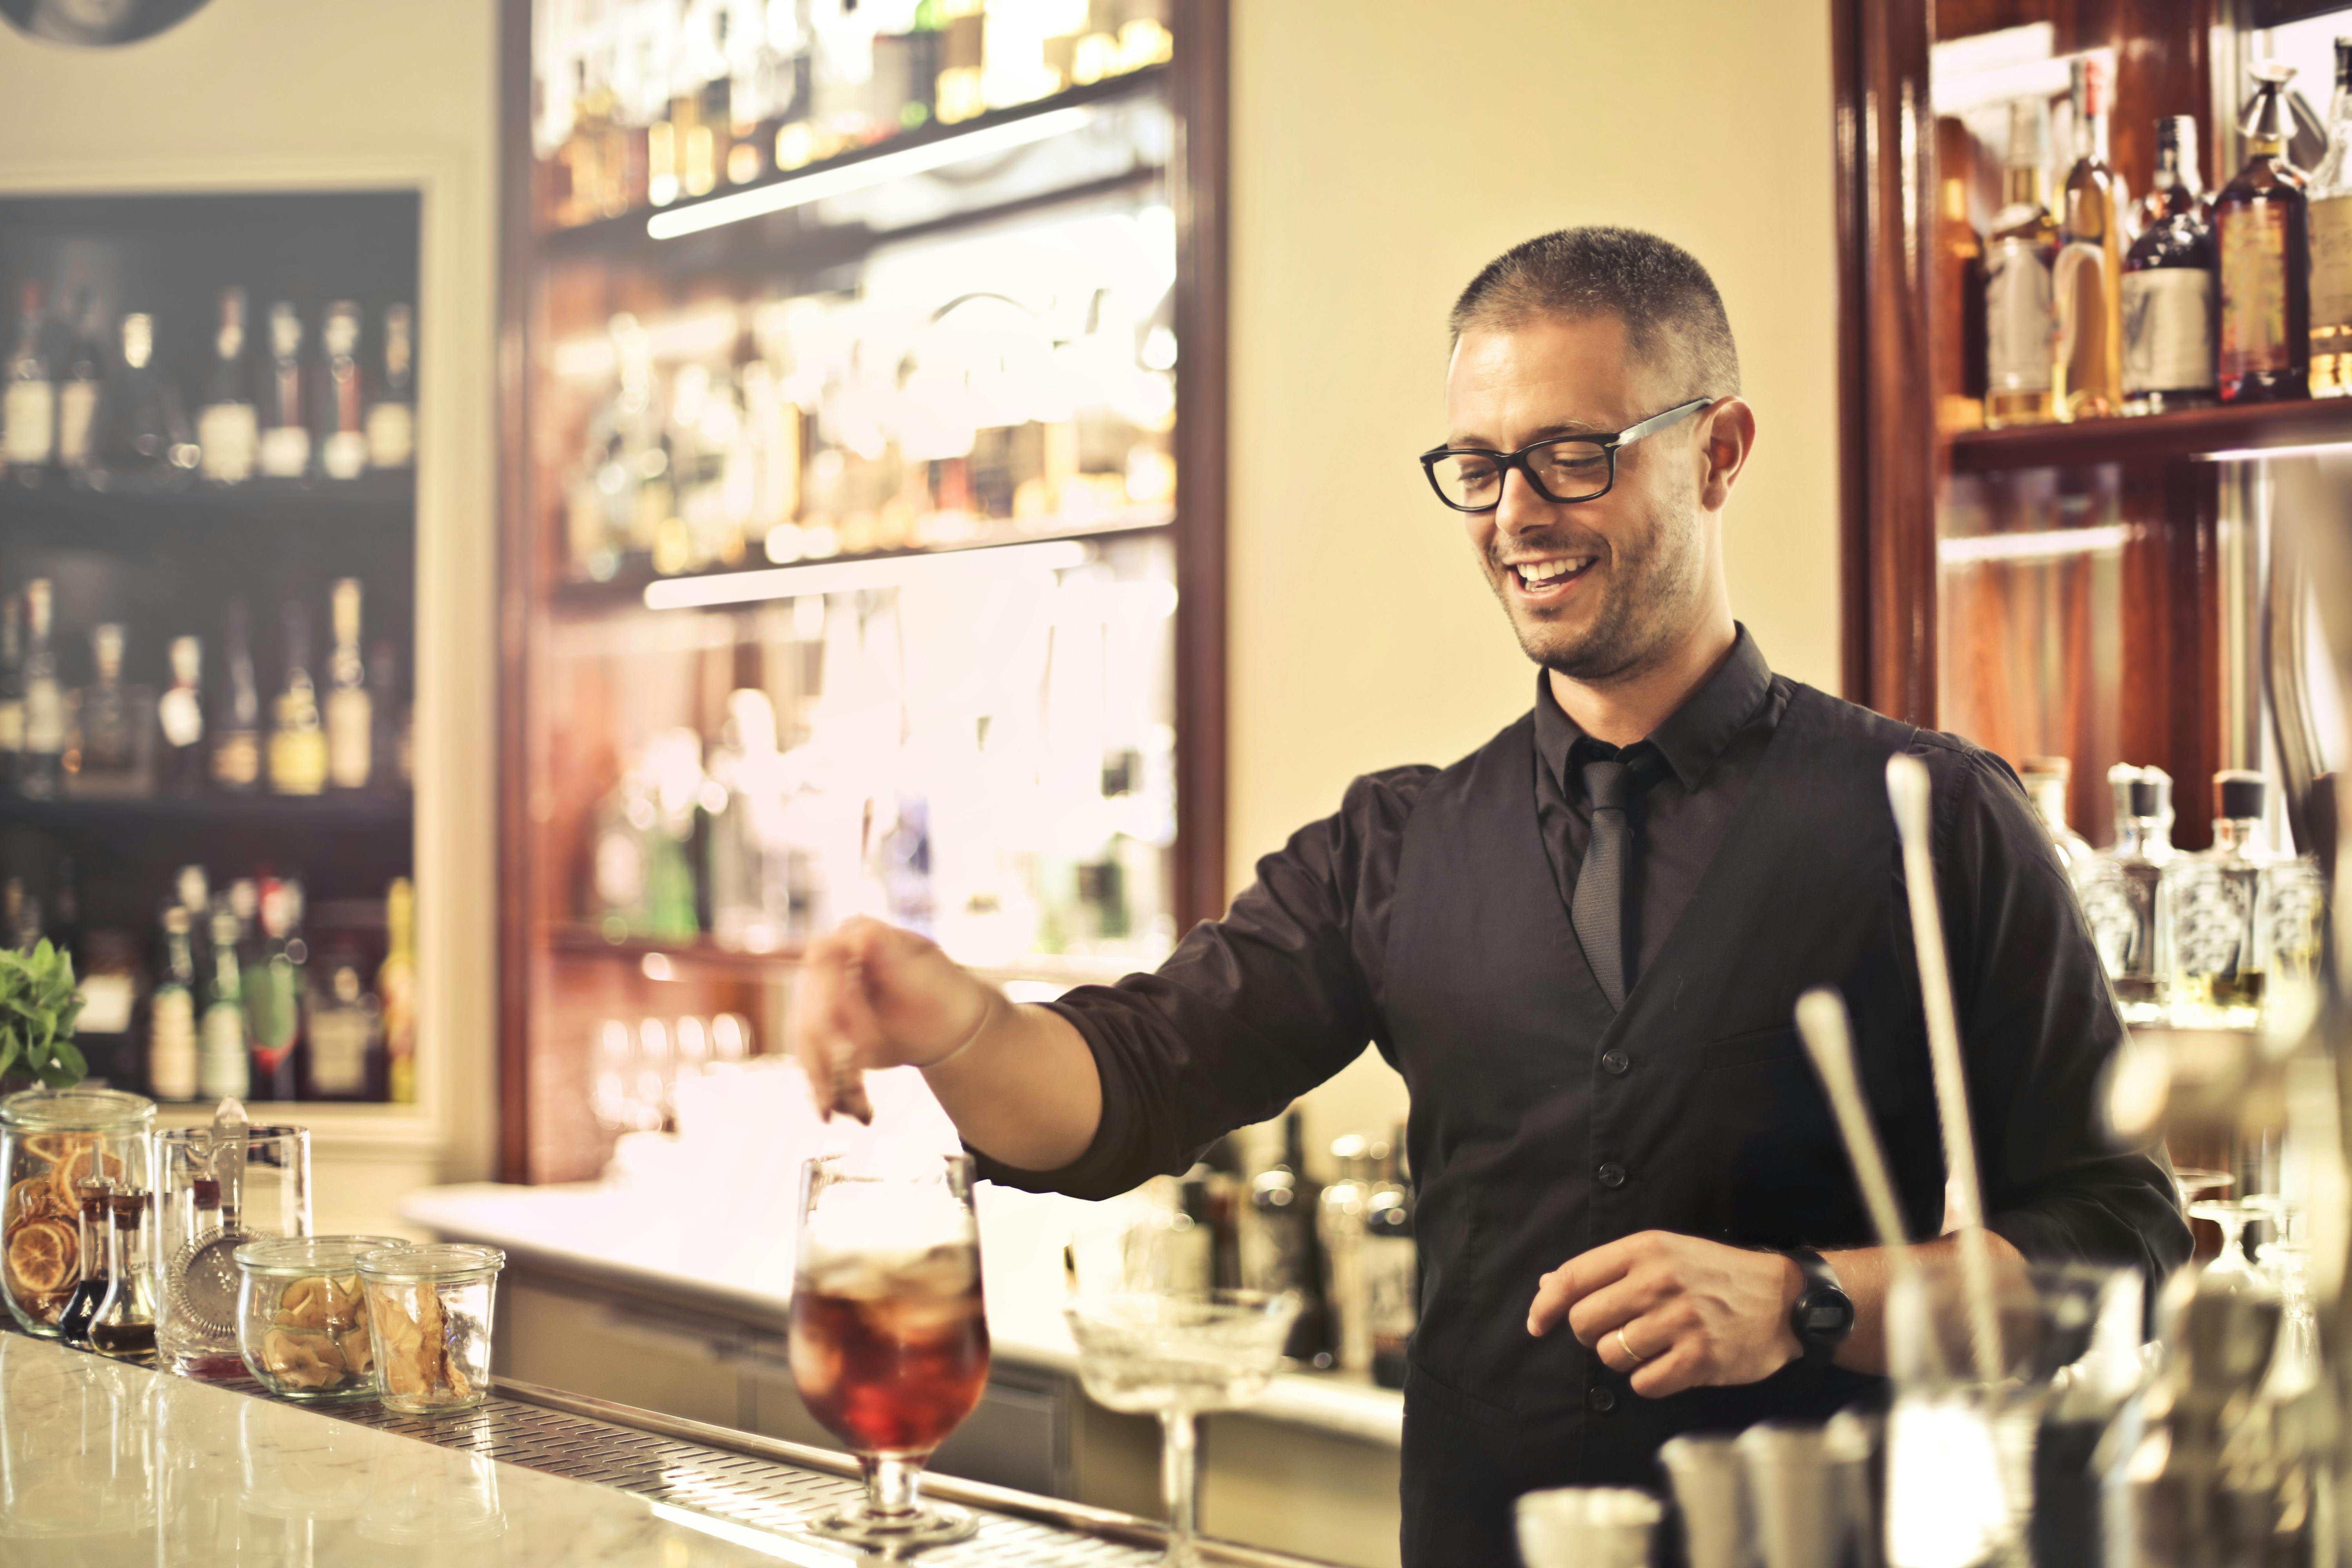 A smiling waiter preparing a drink | Source: Pexels